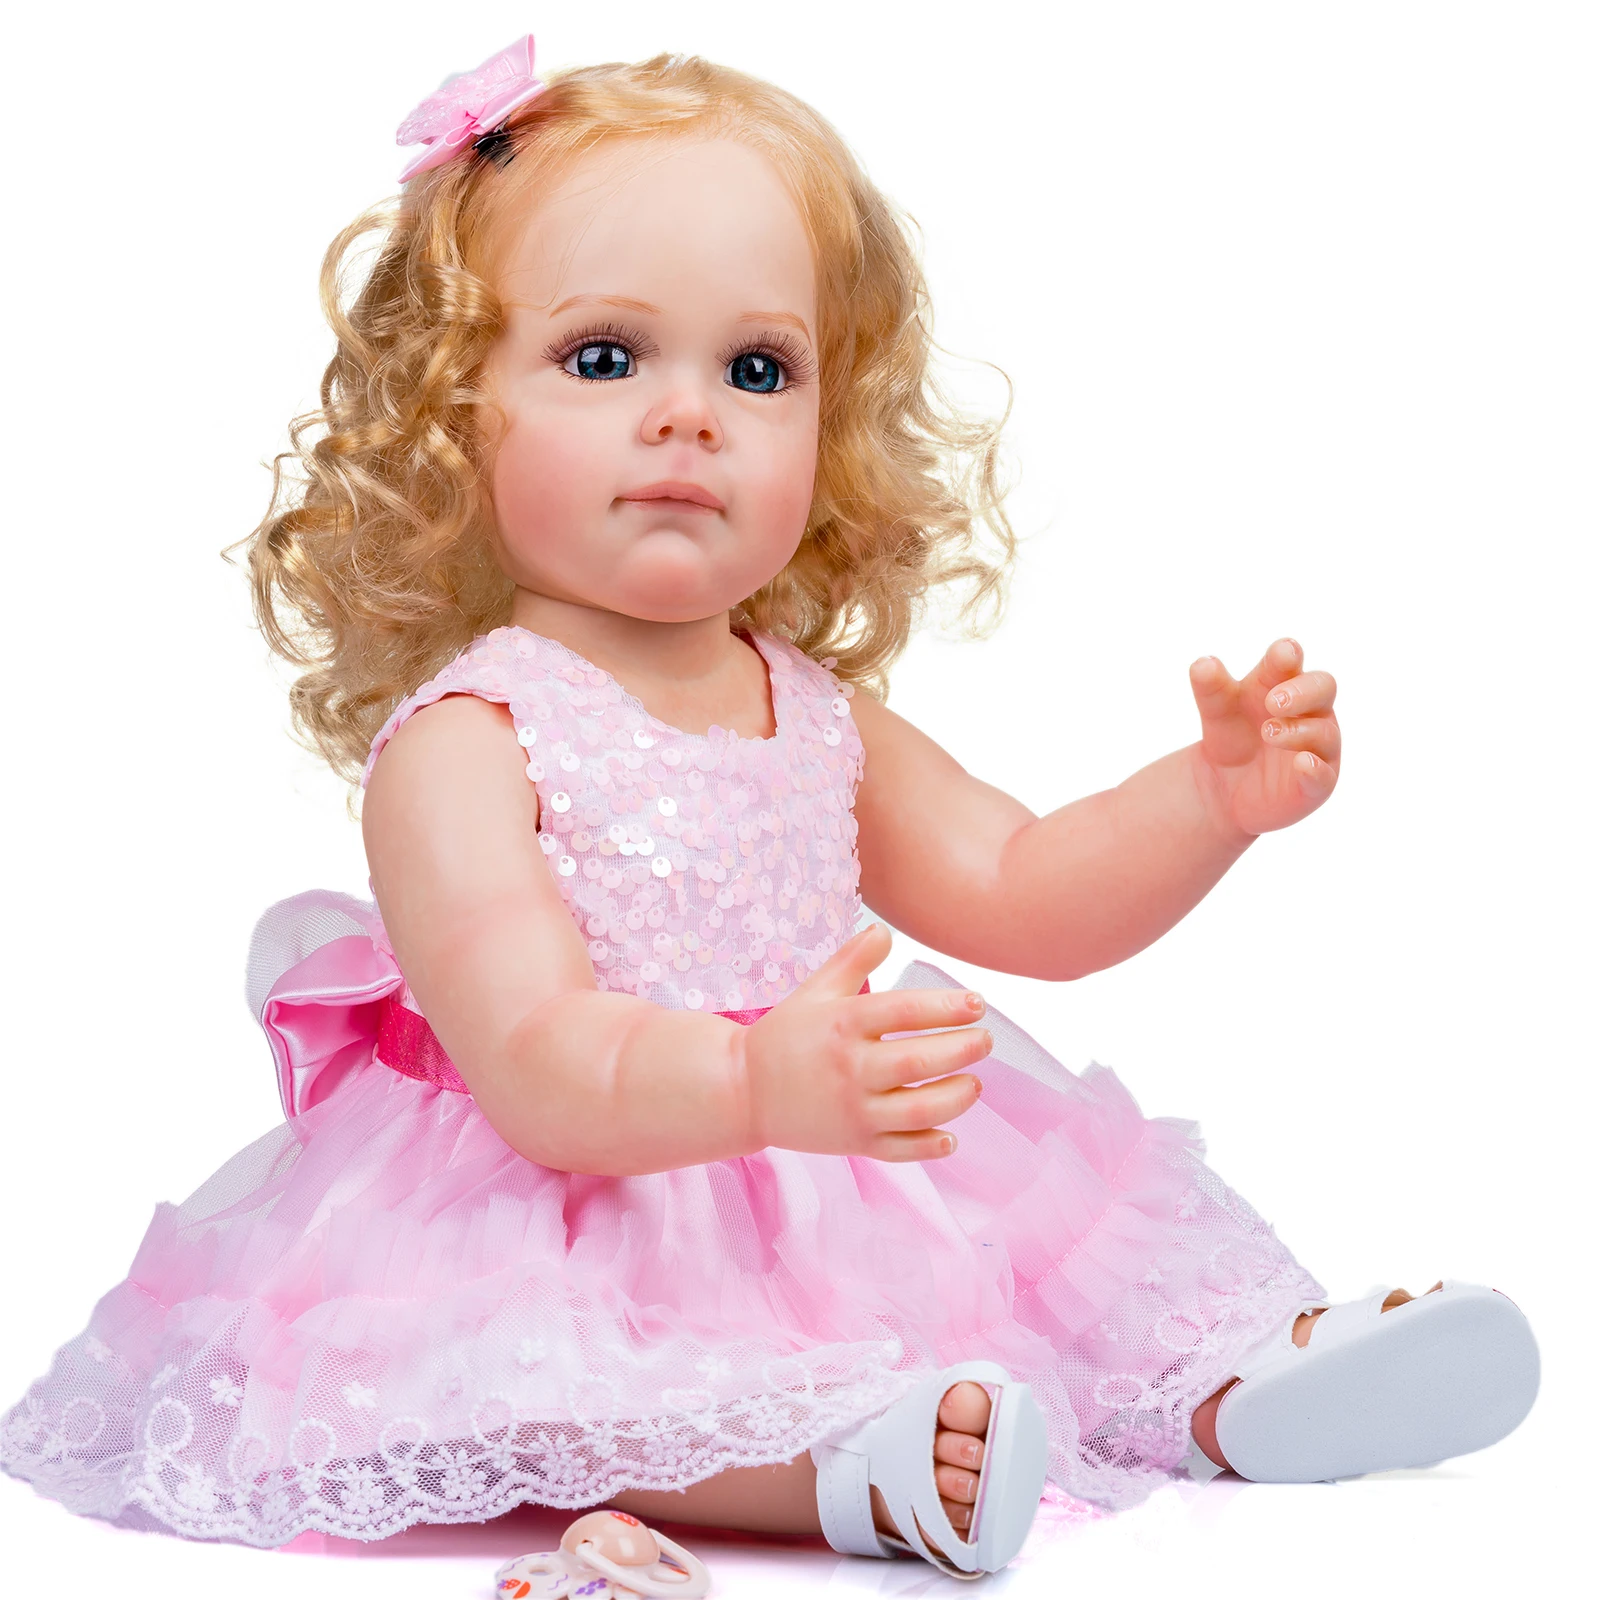 

22inch Newborn Menina Reborn Baby Doll adorable princess girl Maddie toddler full silicone vinyl body bonecas Children's gift